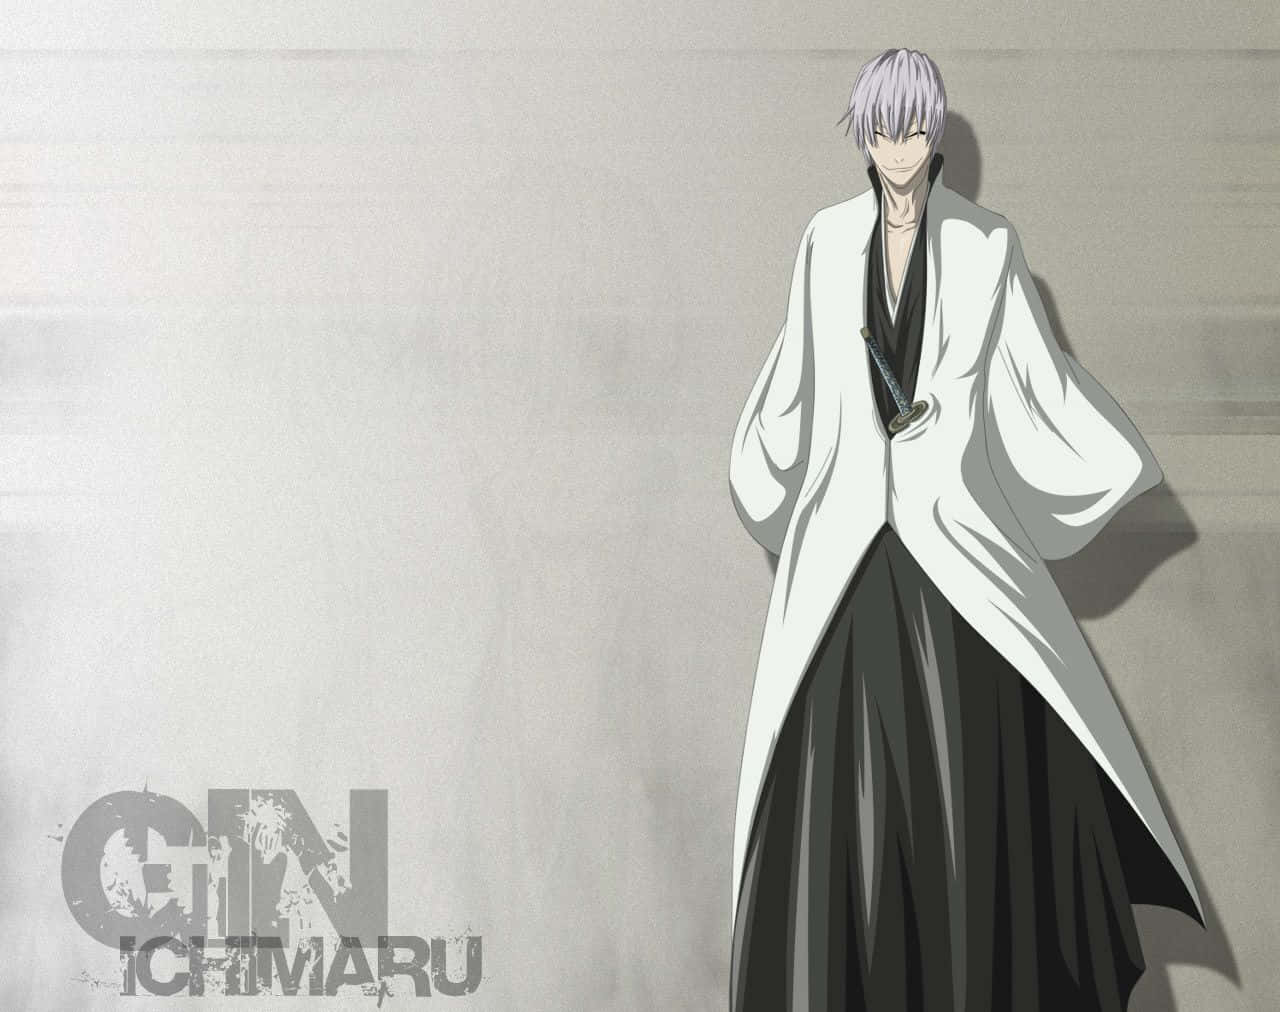 Gin Ichimaru, the dangerous and powerful Soul Reaper Wallpaper